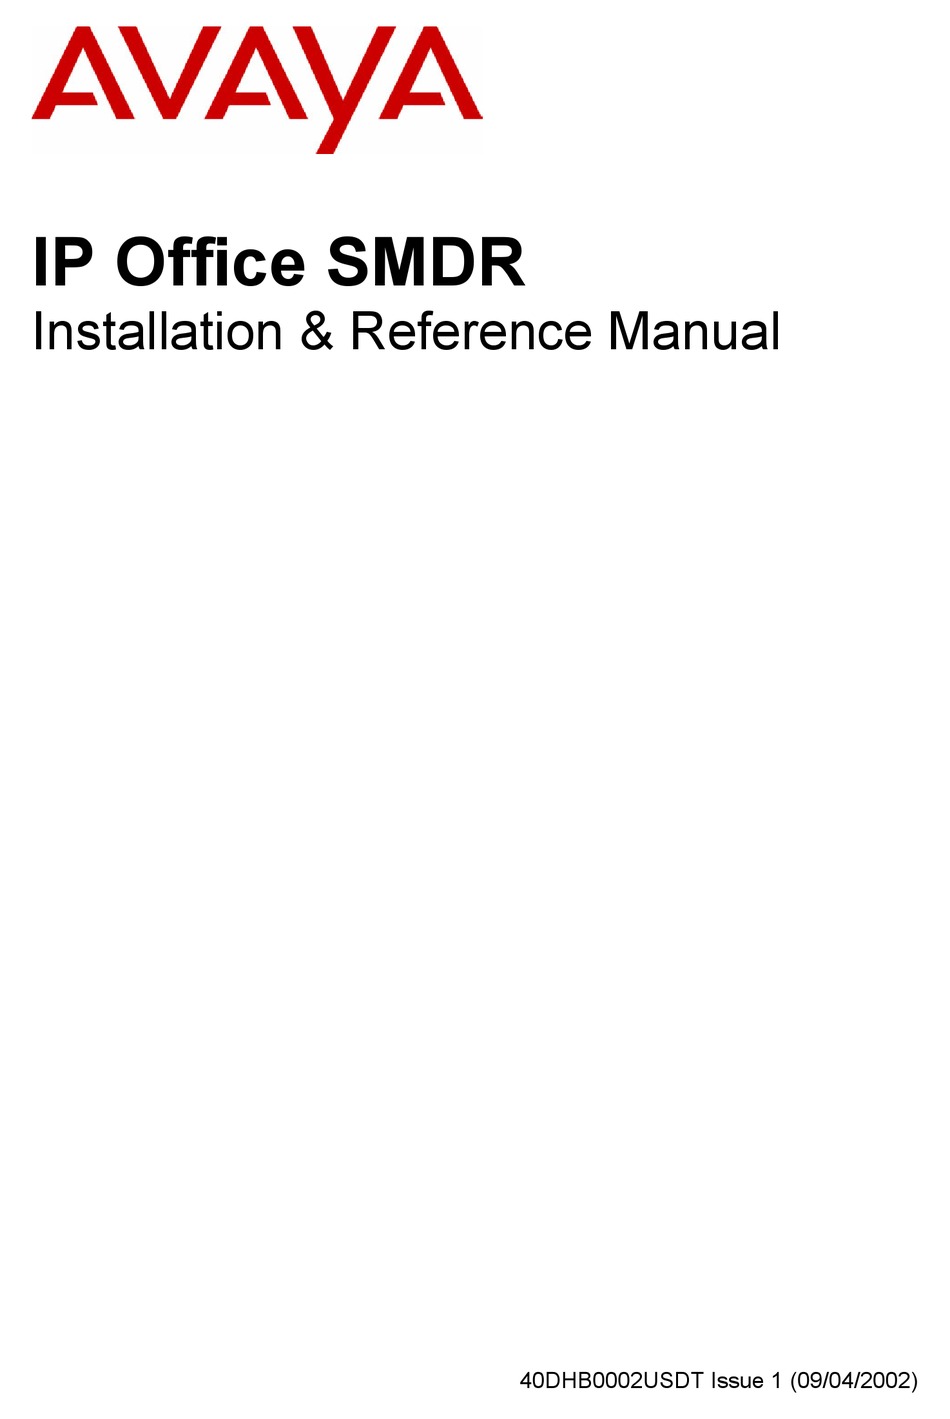 AVAYA IP OFFICE SMDR INSTALLATION & REFERENCE MANUAL Pdf Download |  ManualsLib